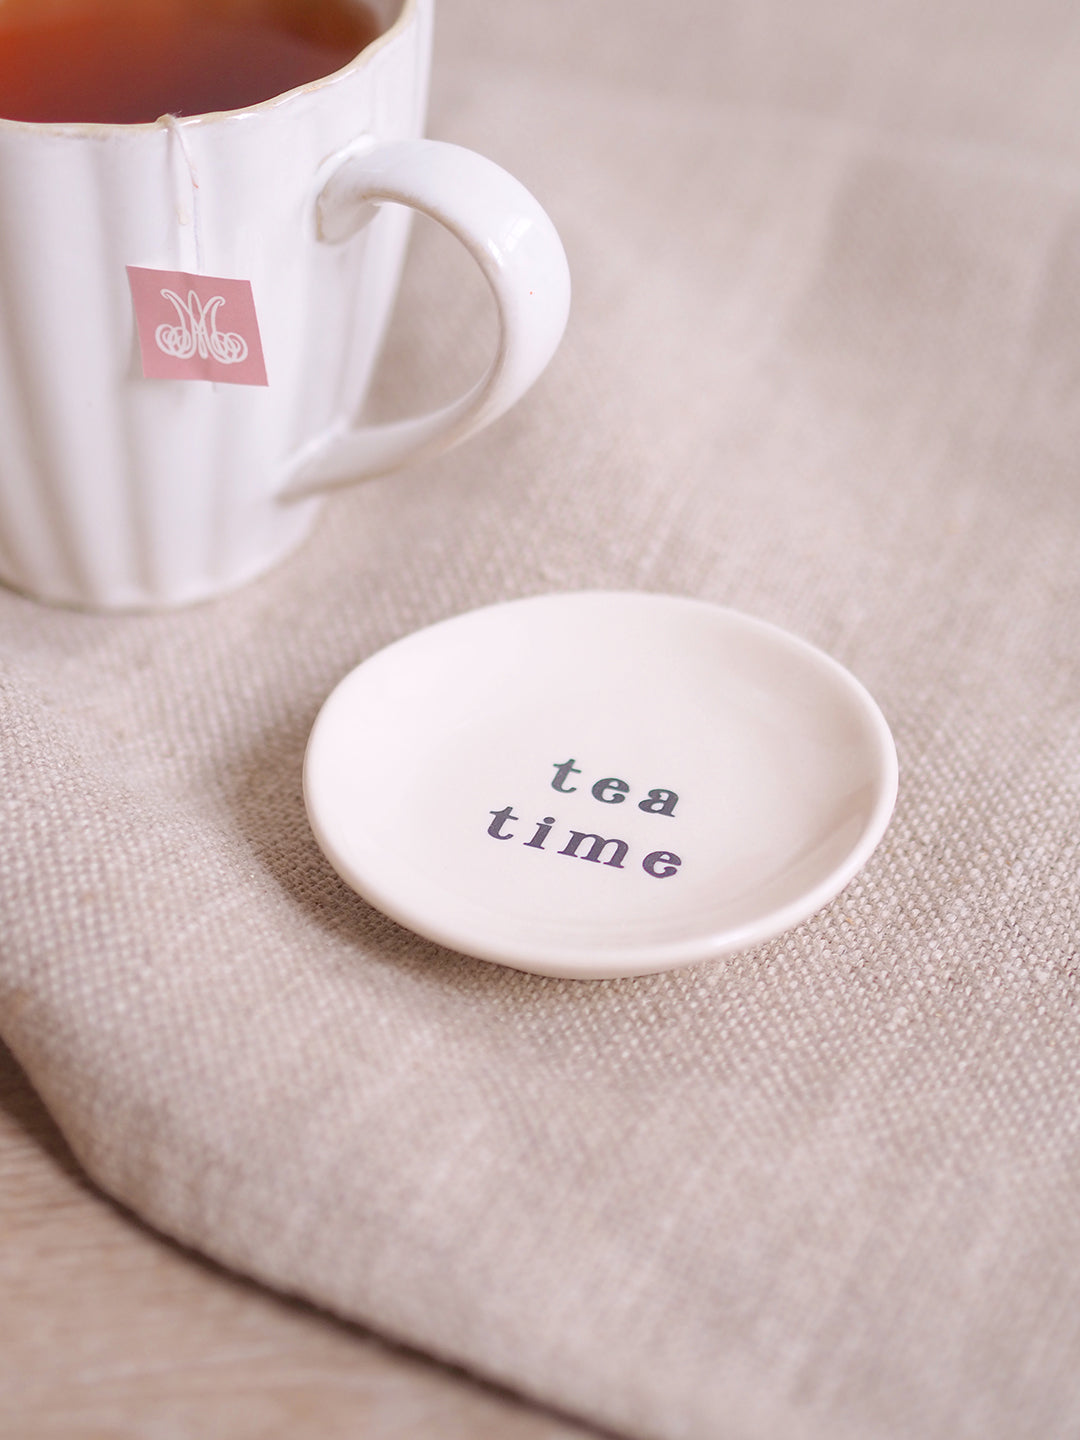 Tea Time Small Plate